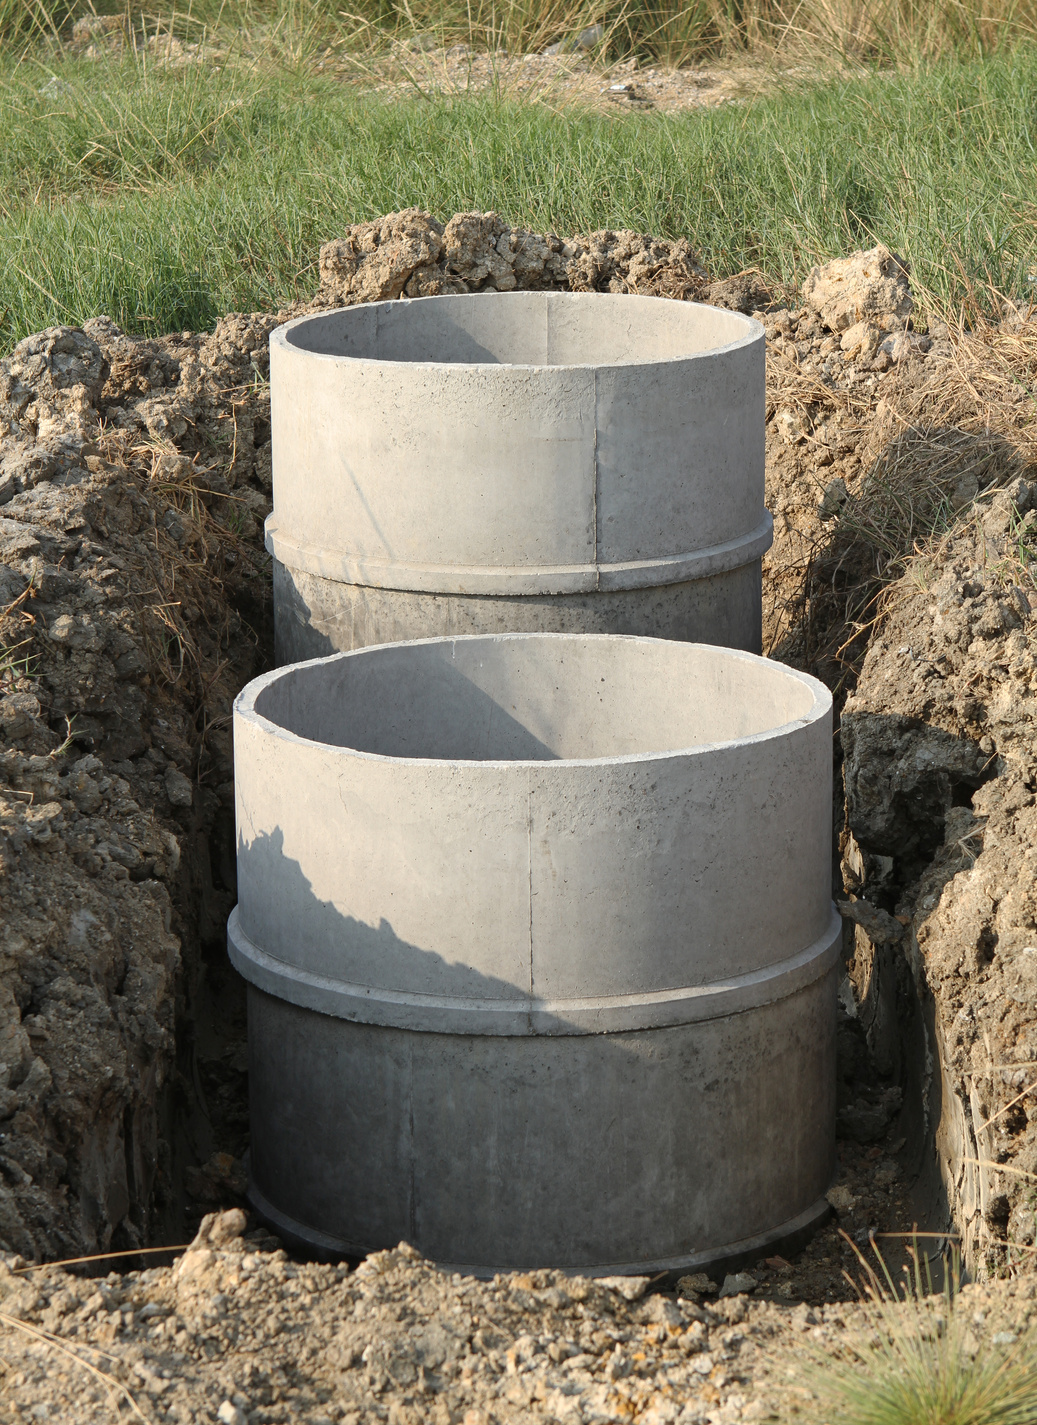 Concrete septic tanks